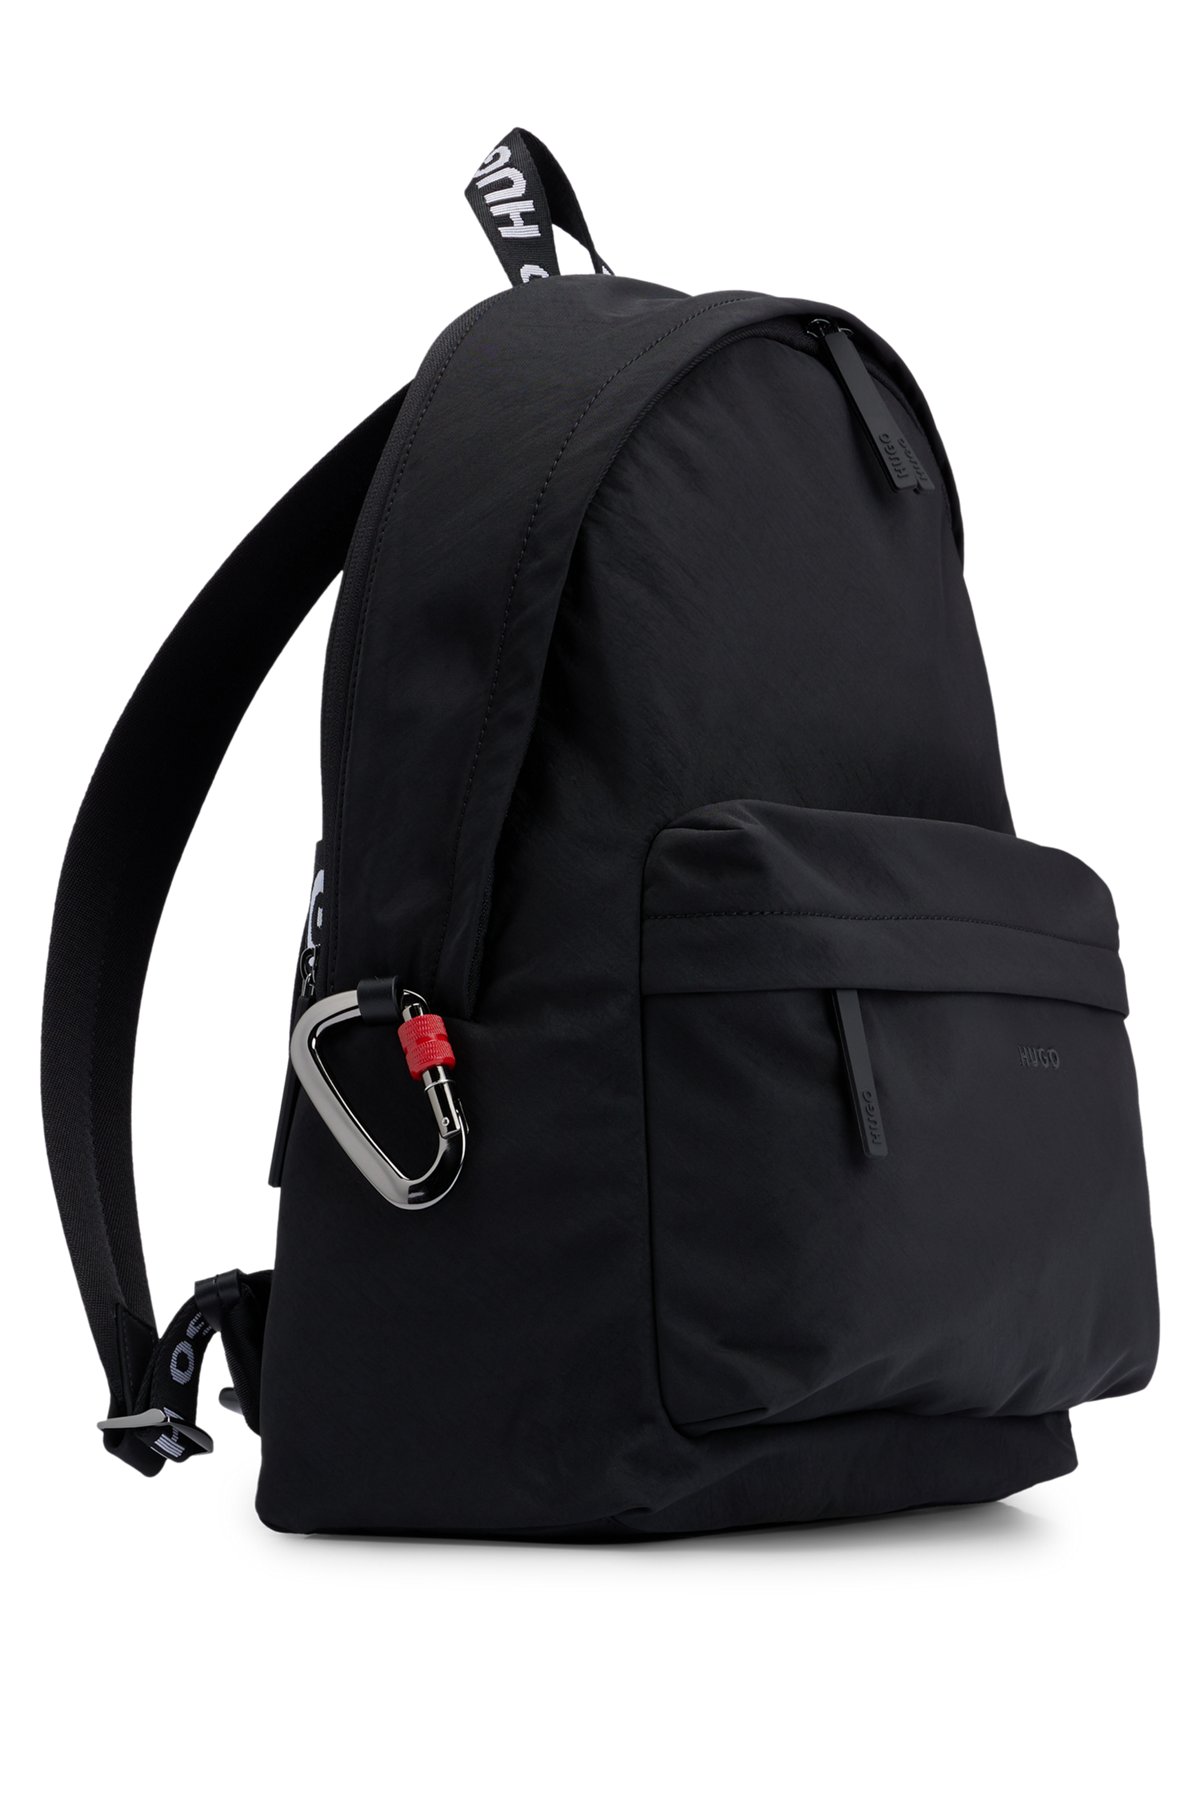 Wrinkle-effect nylon backpack with logo straps, Black